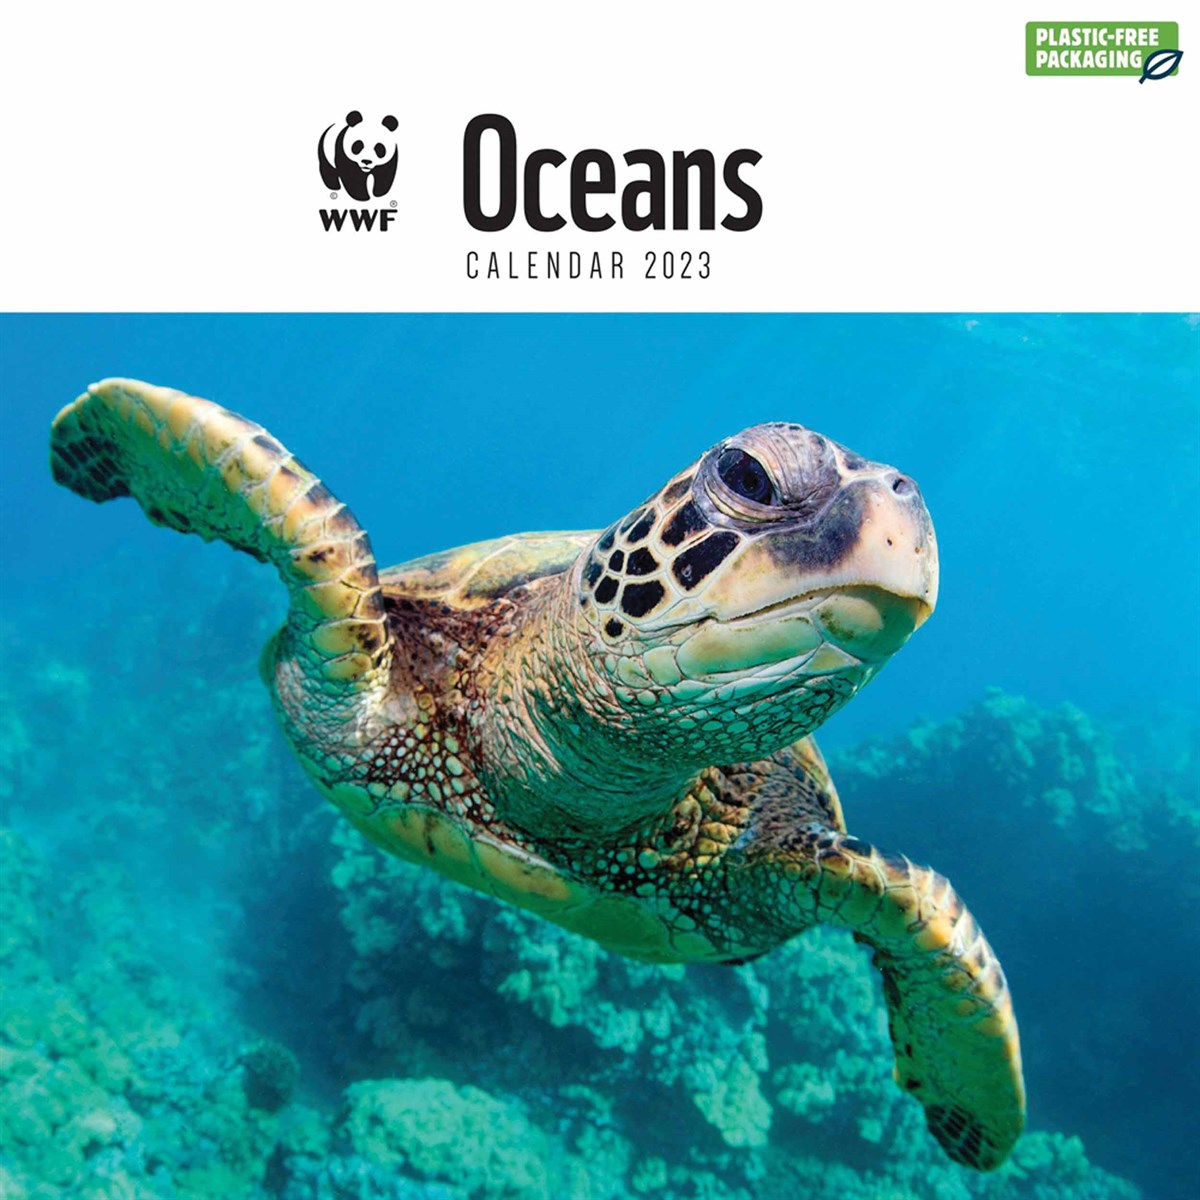 WWF, Oceans 2023 Calendars